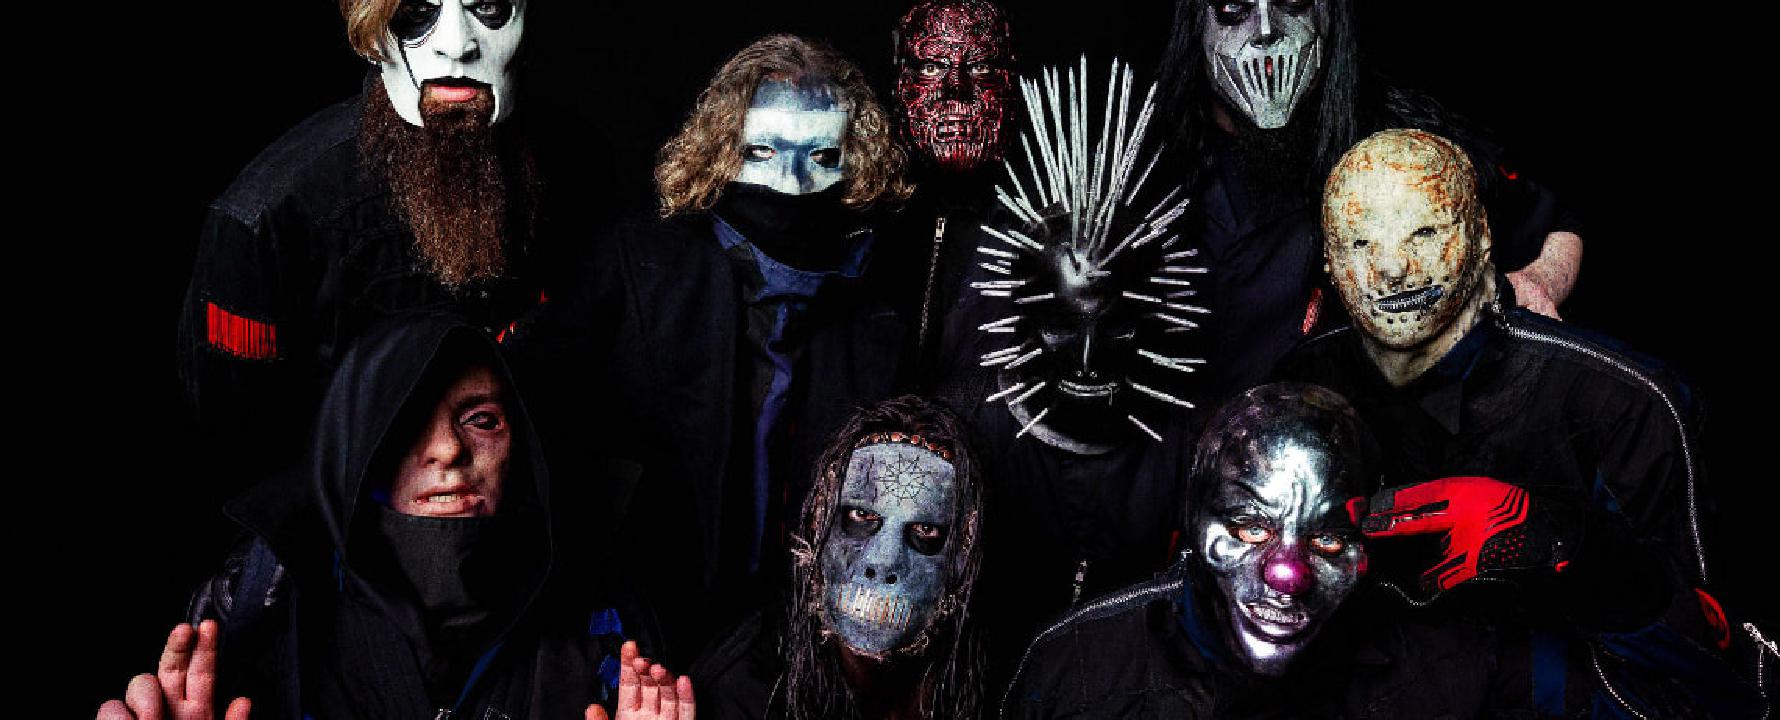 Promotional photograph of Slipknot.